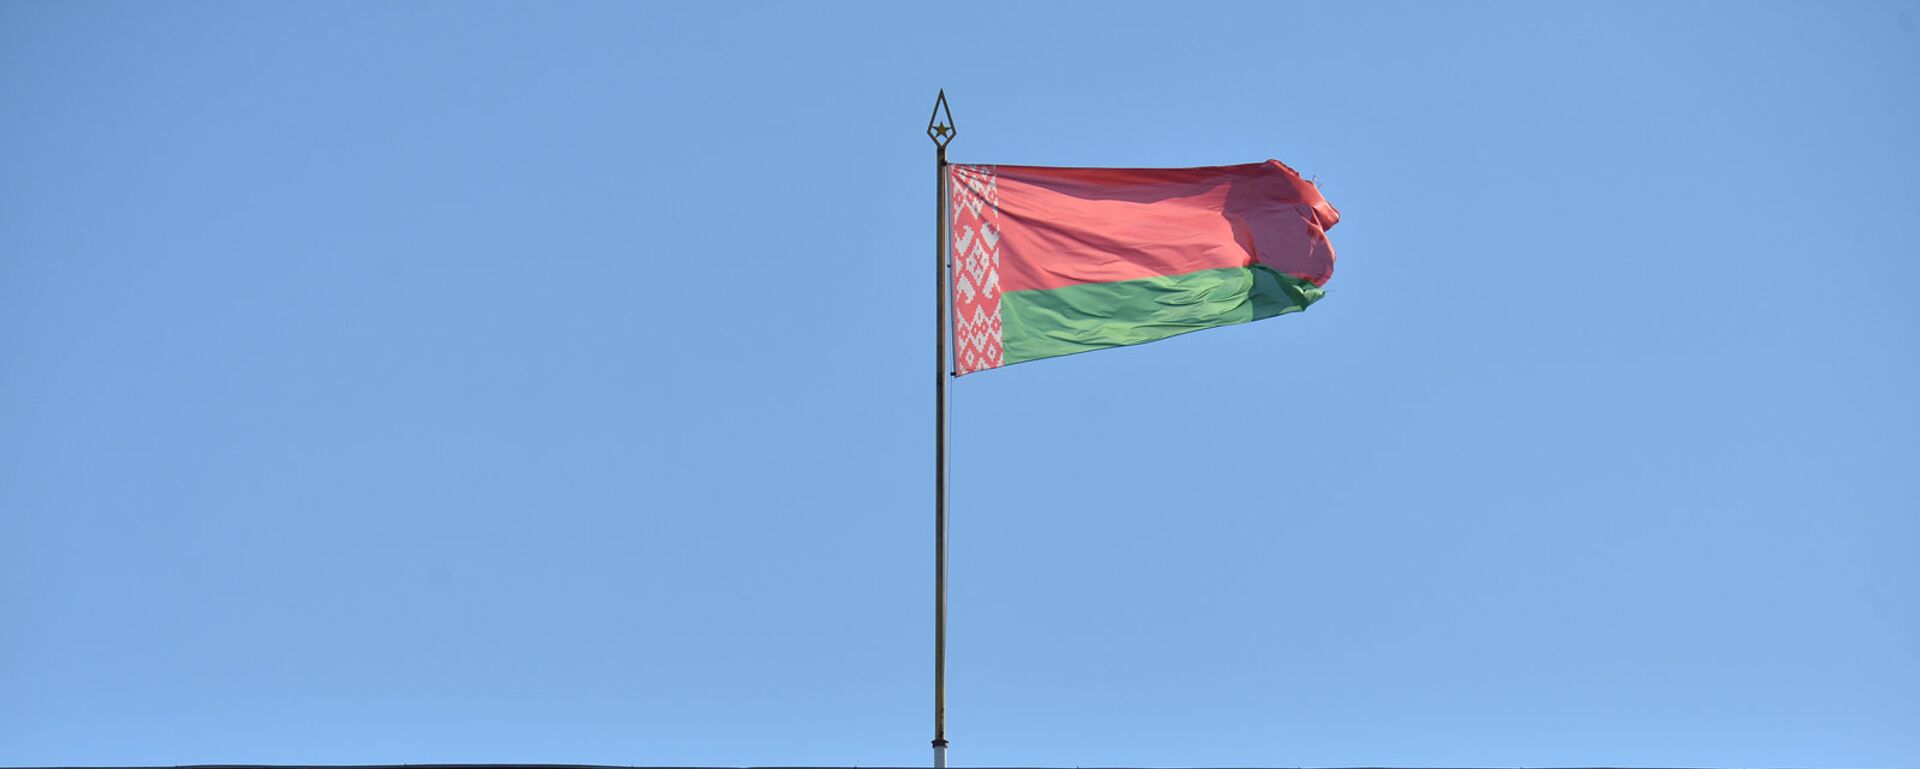 Герб и флаг Республики Беларусь - Sputnik Латвия, 1920, 29.09.2020